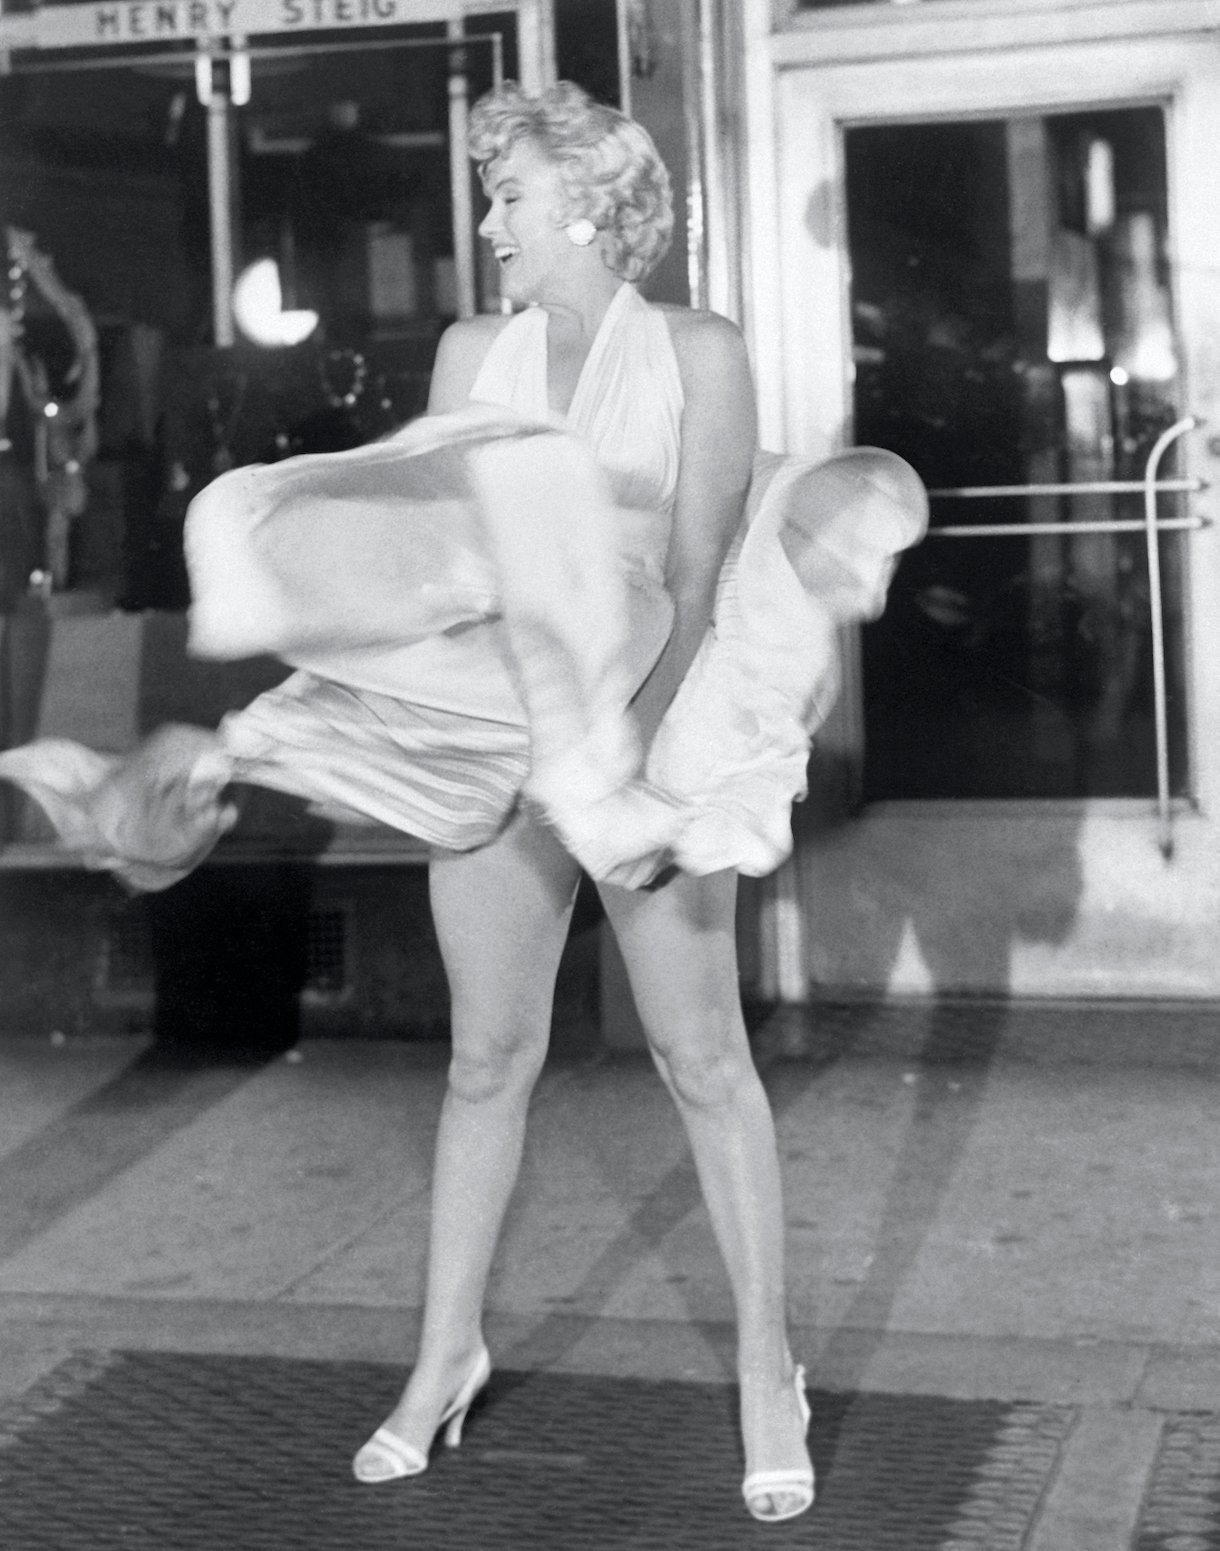 Marilyn Monroe on Subway Grate